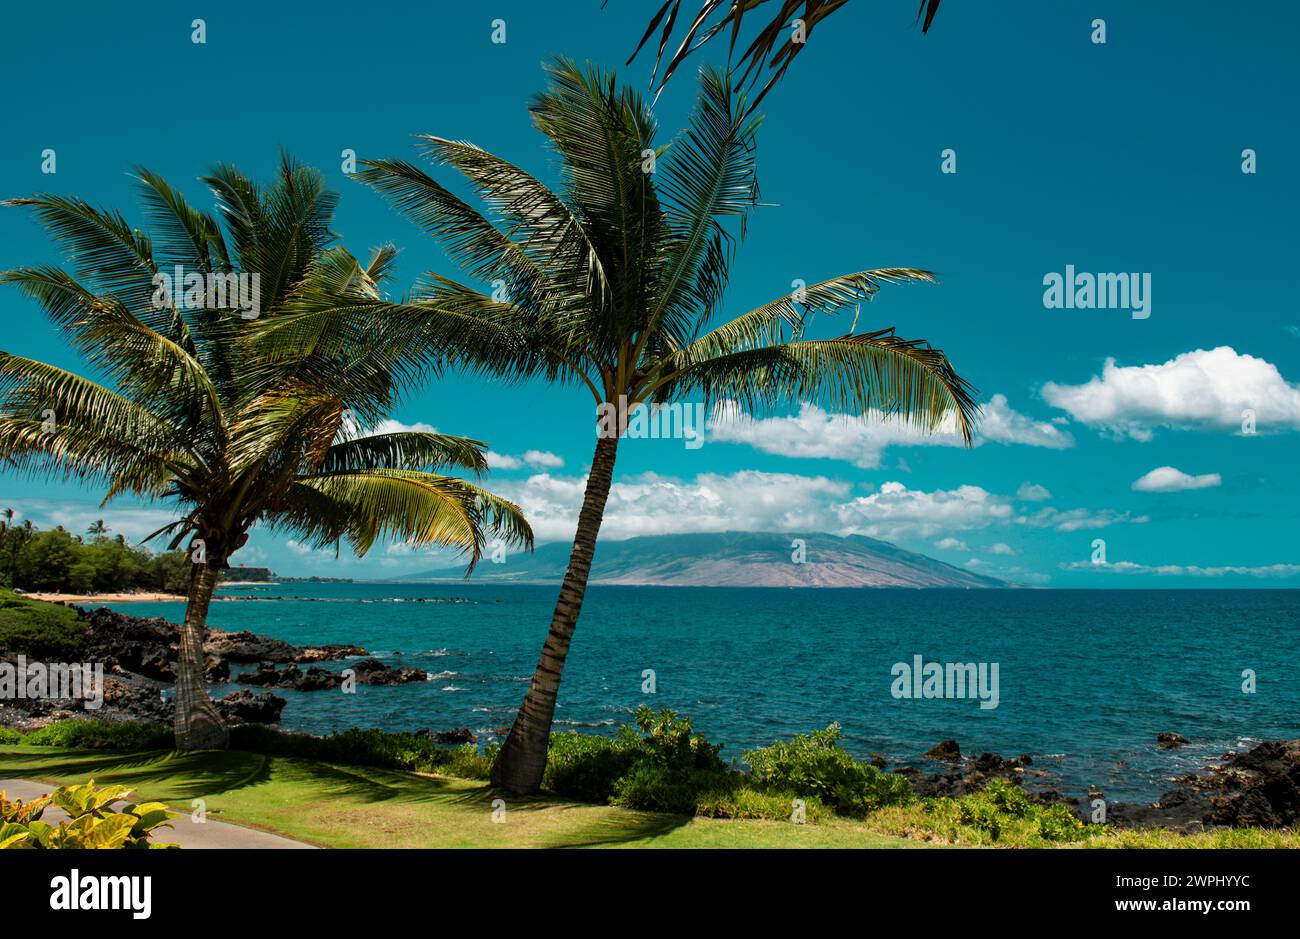 Hawaii beach, hawaiian ocean, aloha maui island. Tropical beach panorama. Stock Photo